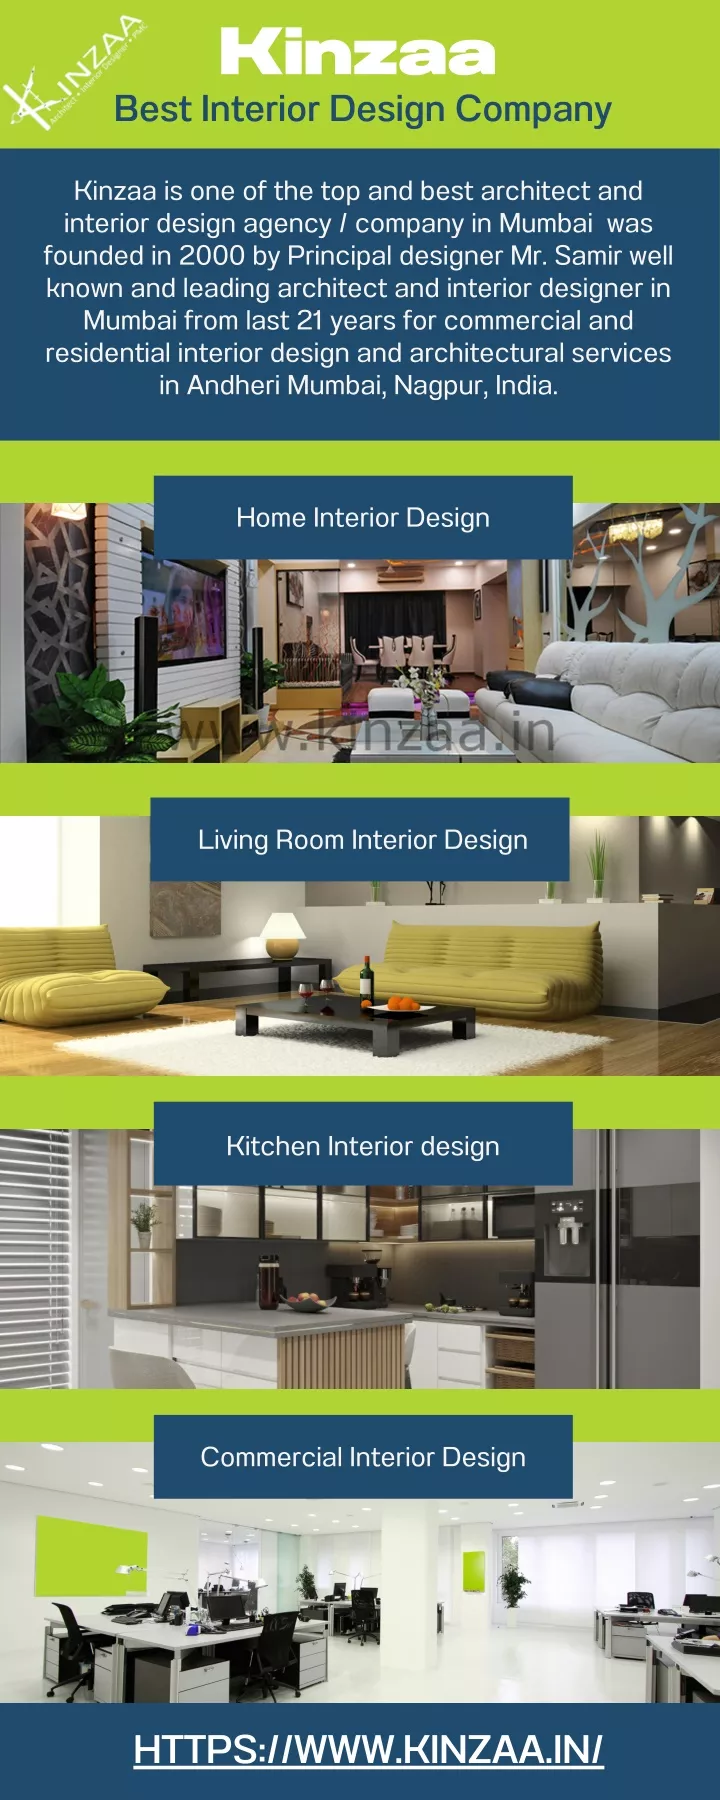 kinzaa best interior design company